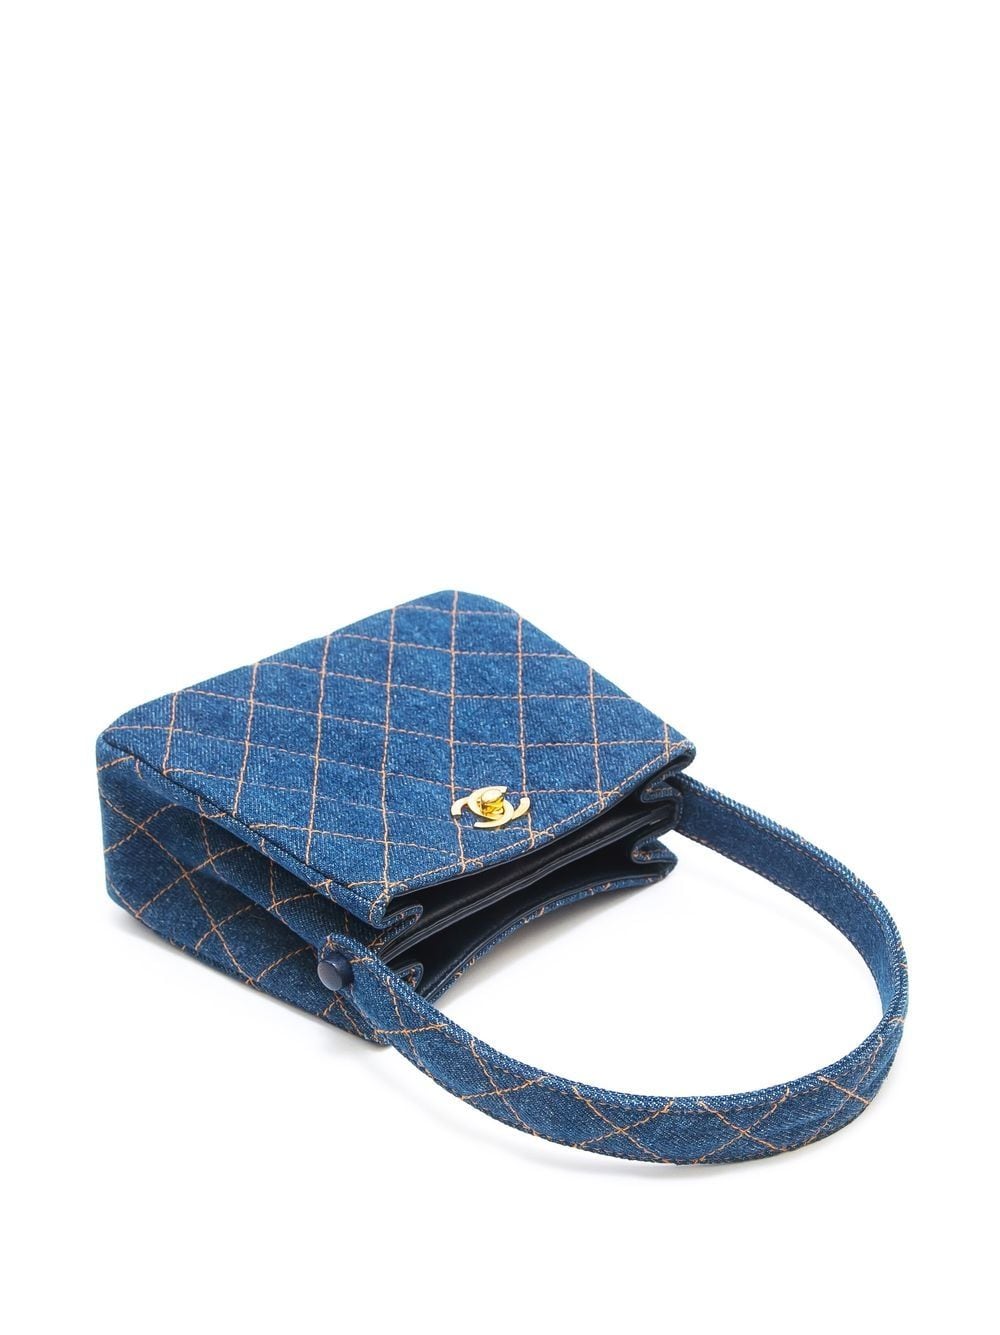 Chanel Rubber Bag - 25 For Sale on 1stDibs